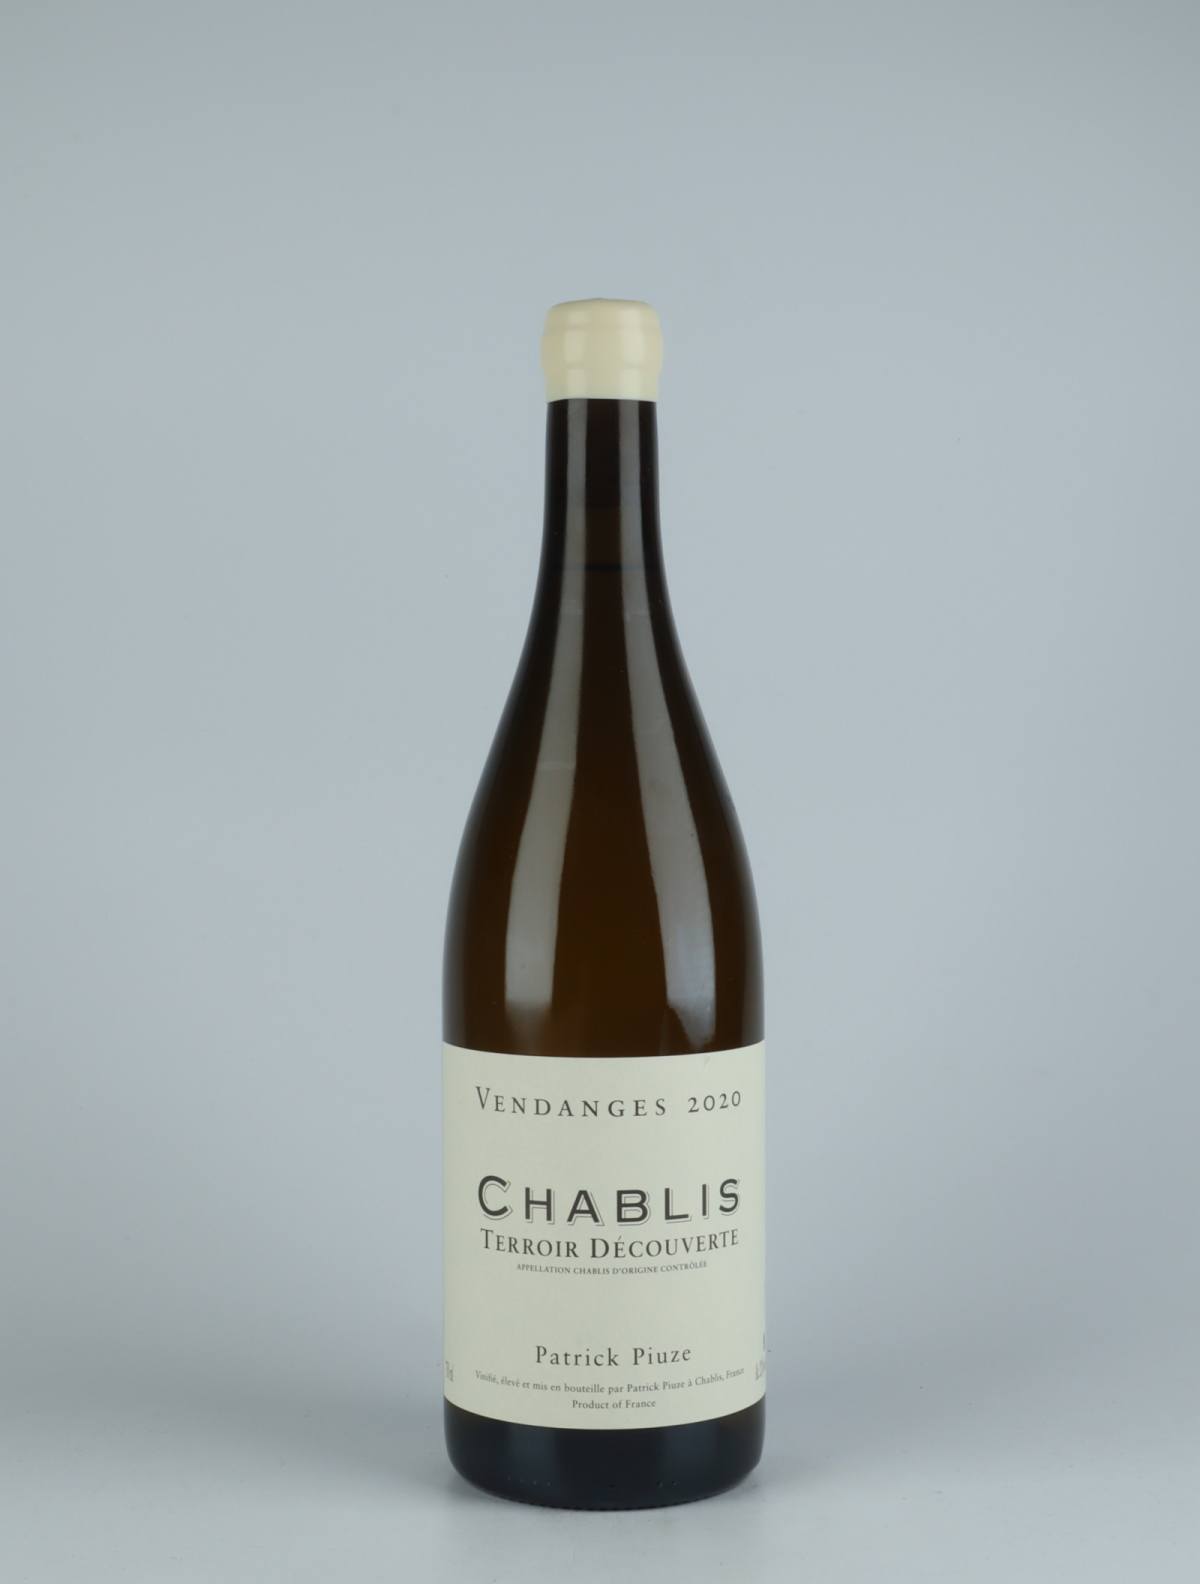 En flaske 2020 Chablis - Terroir Découverte Hvidvin fra Patrick Piuze, Bourgogne i Frankrig